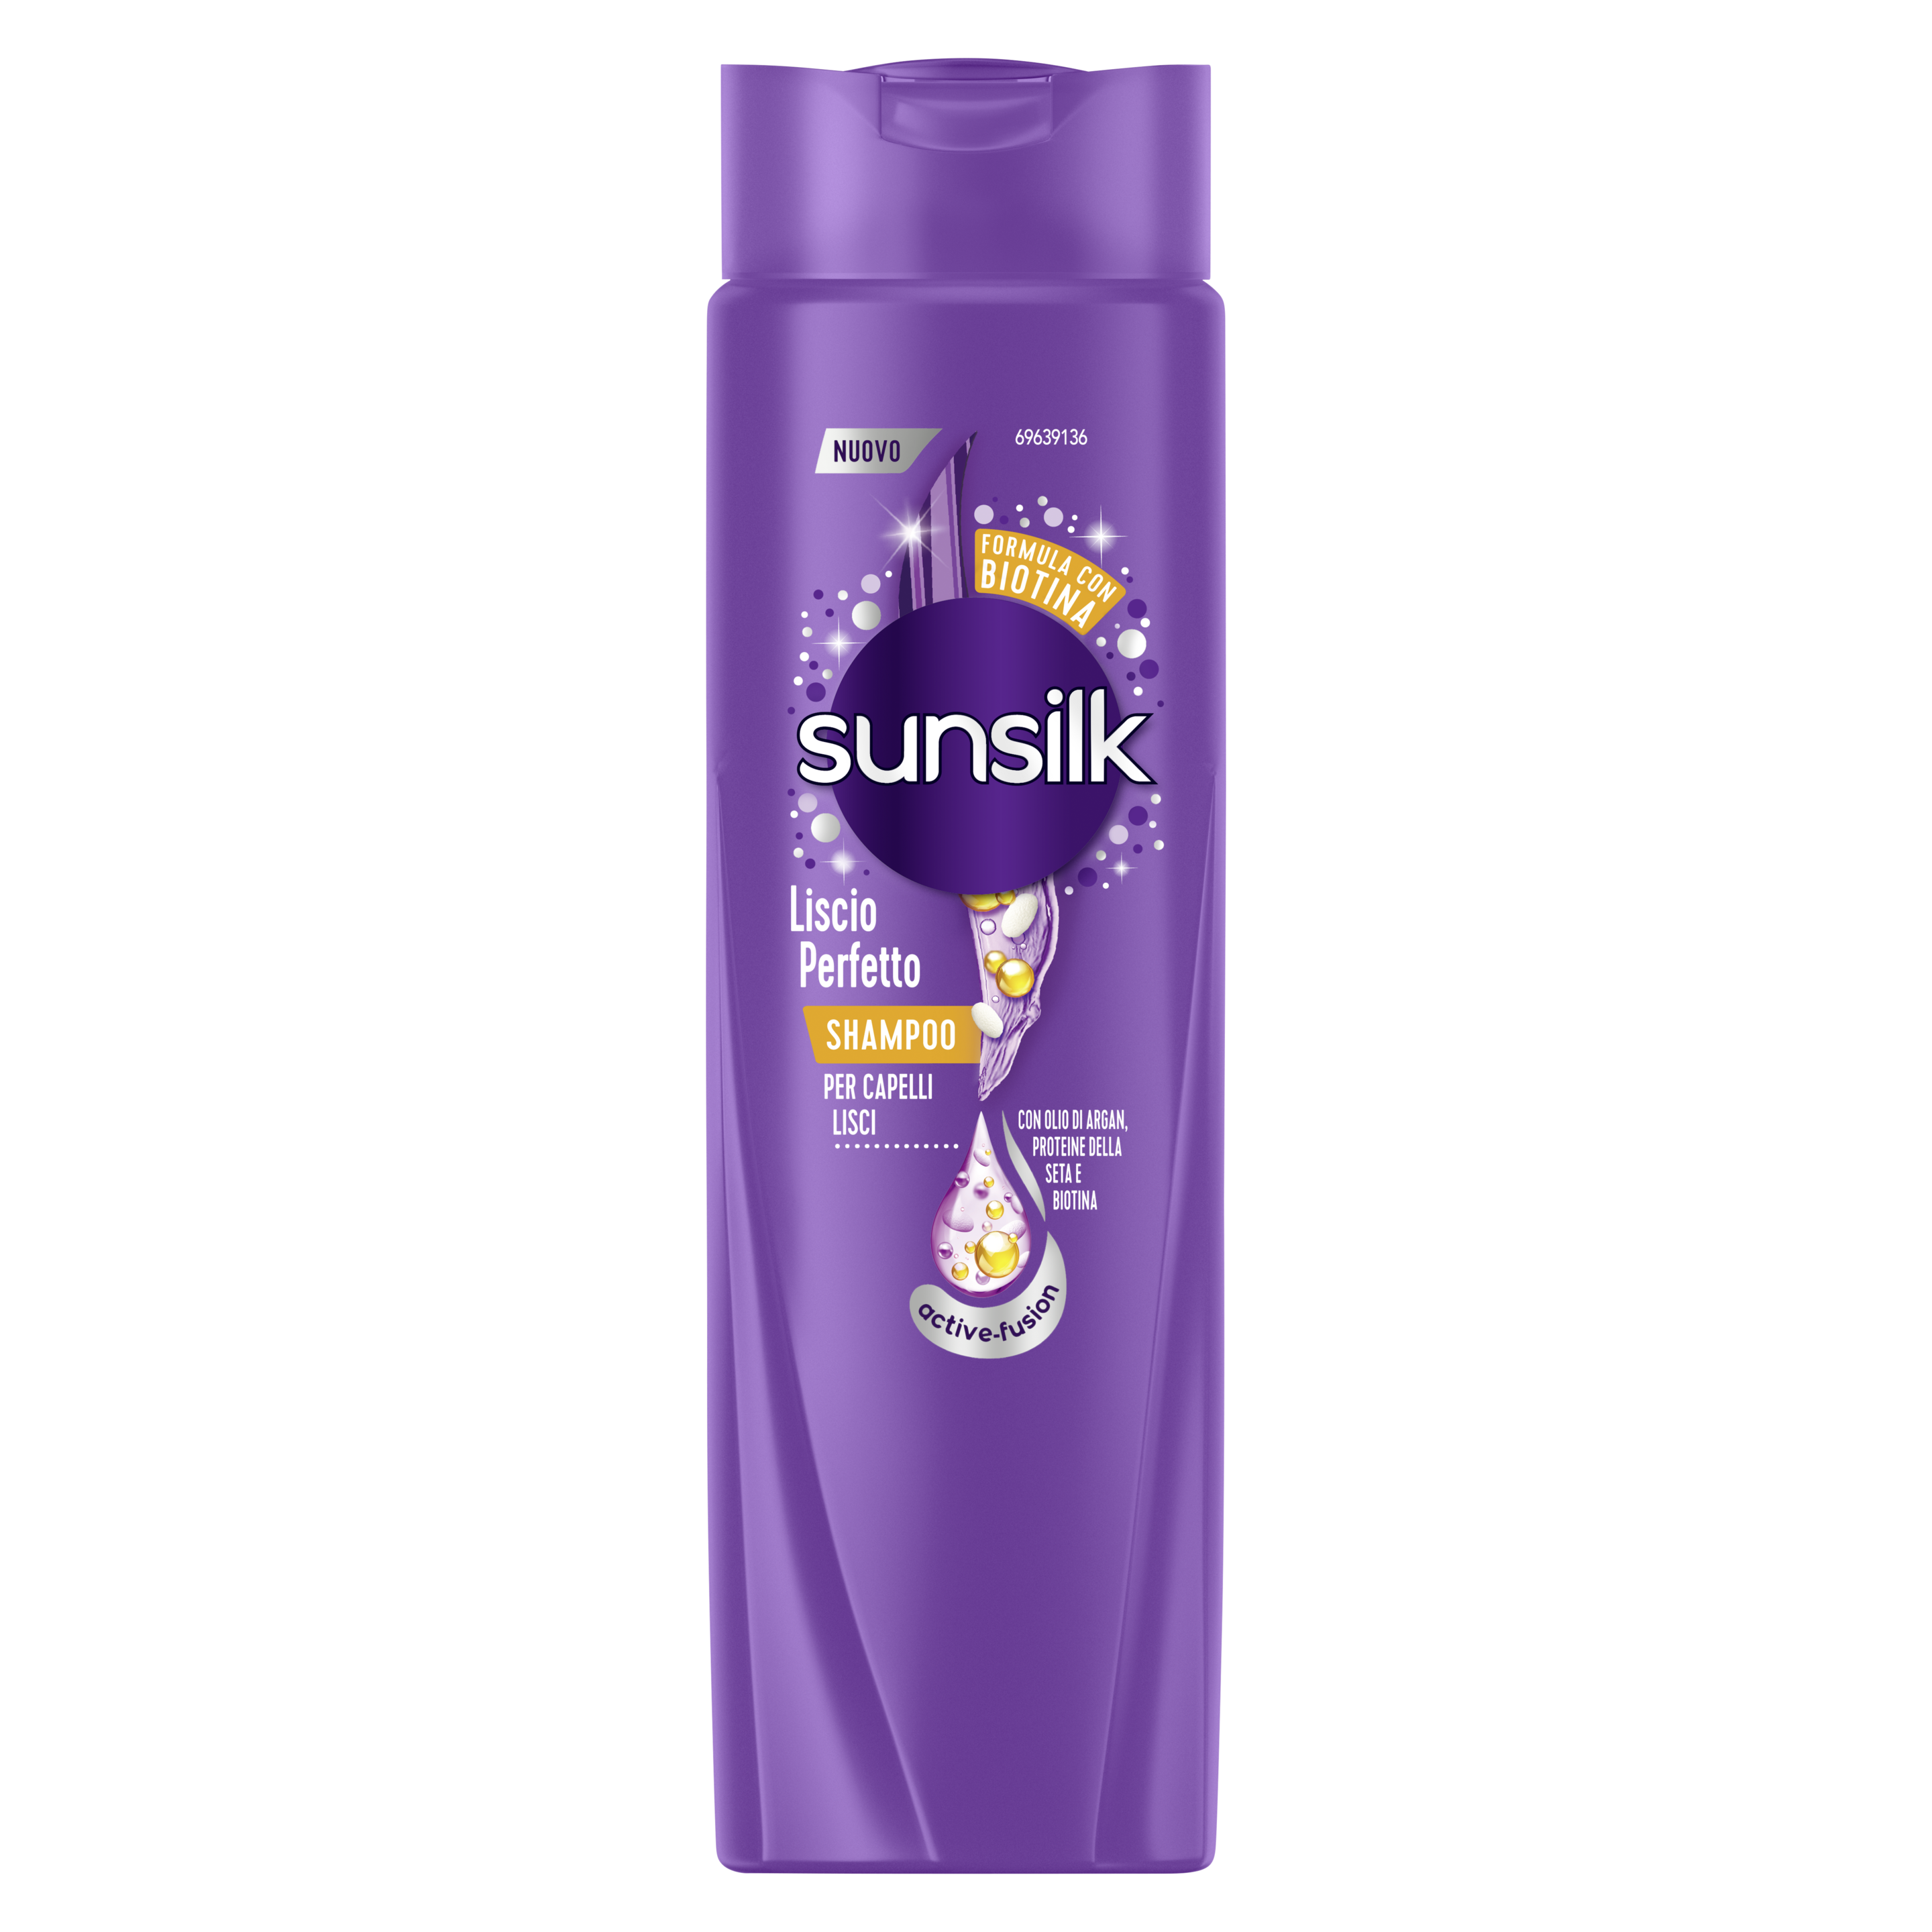 Sunsilk Shampoo Liscio Perfetto 250 ml